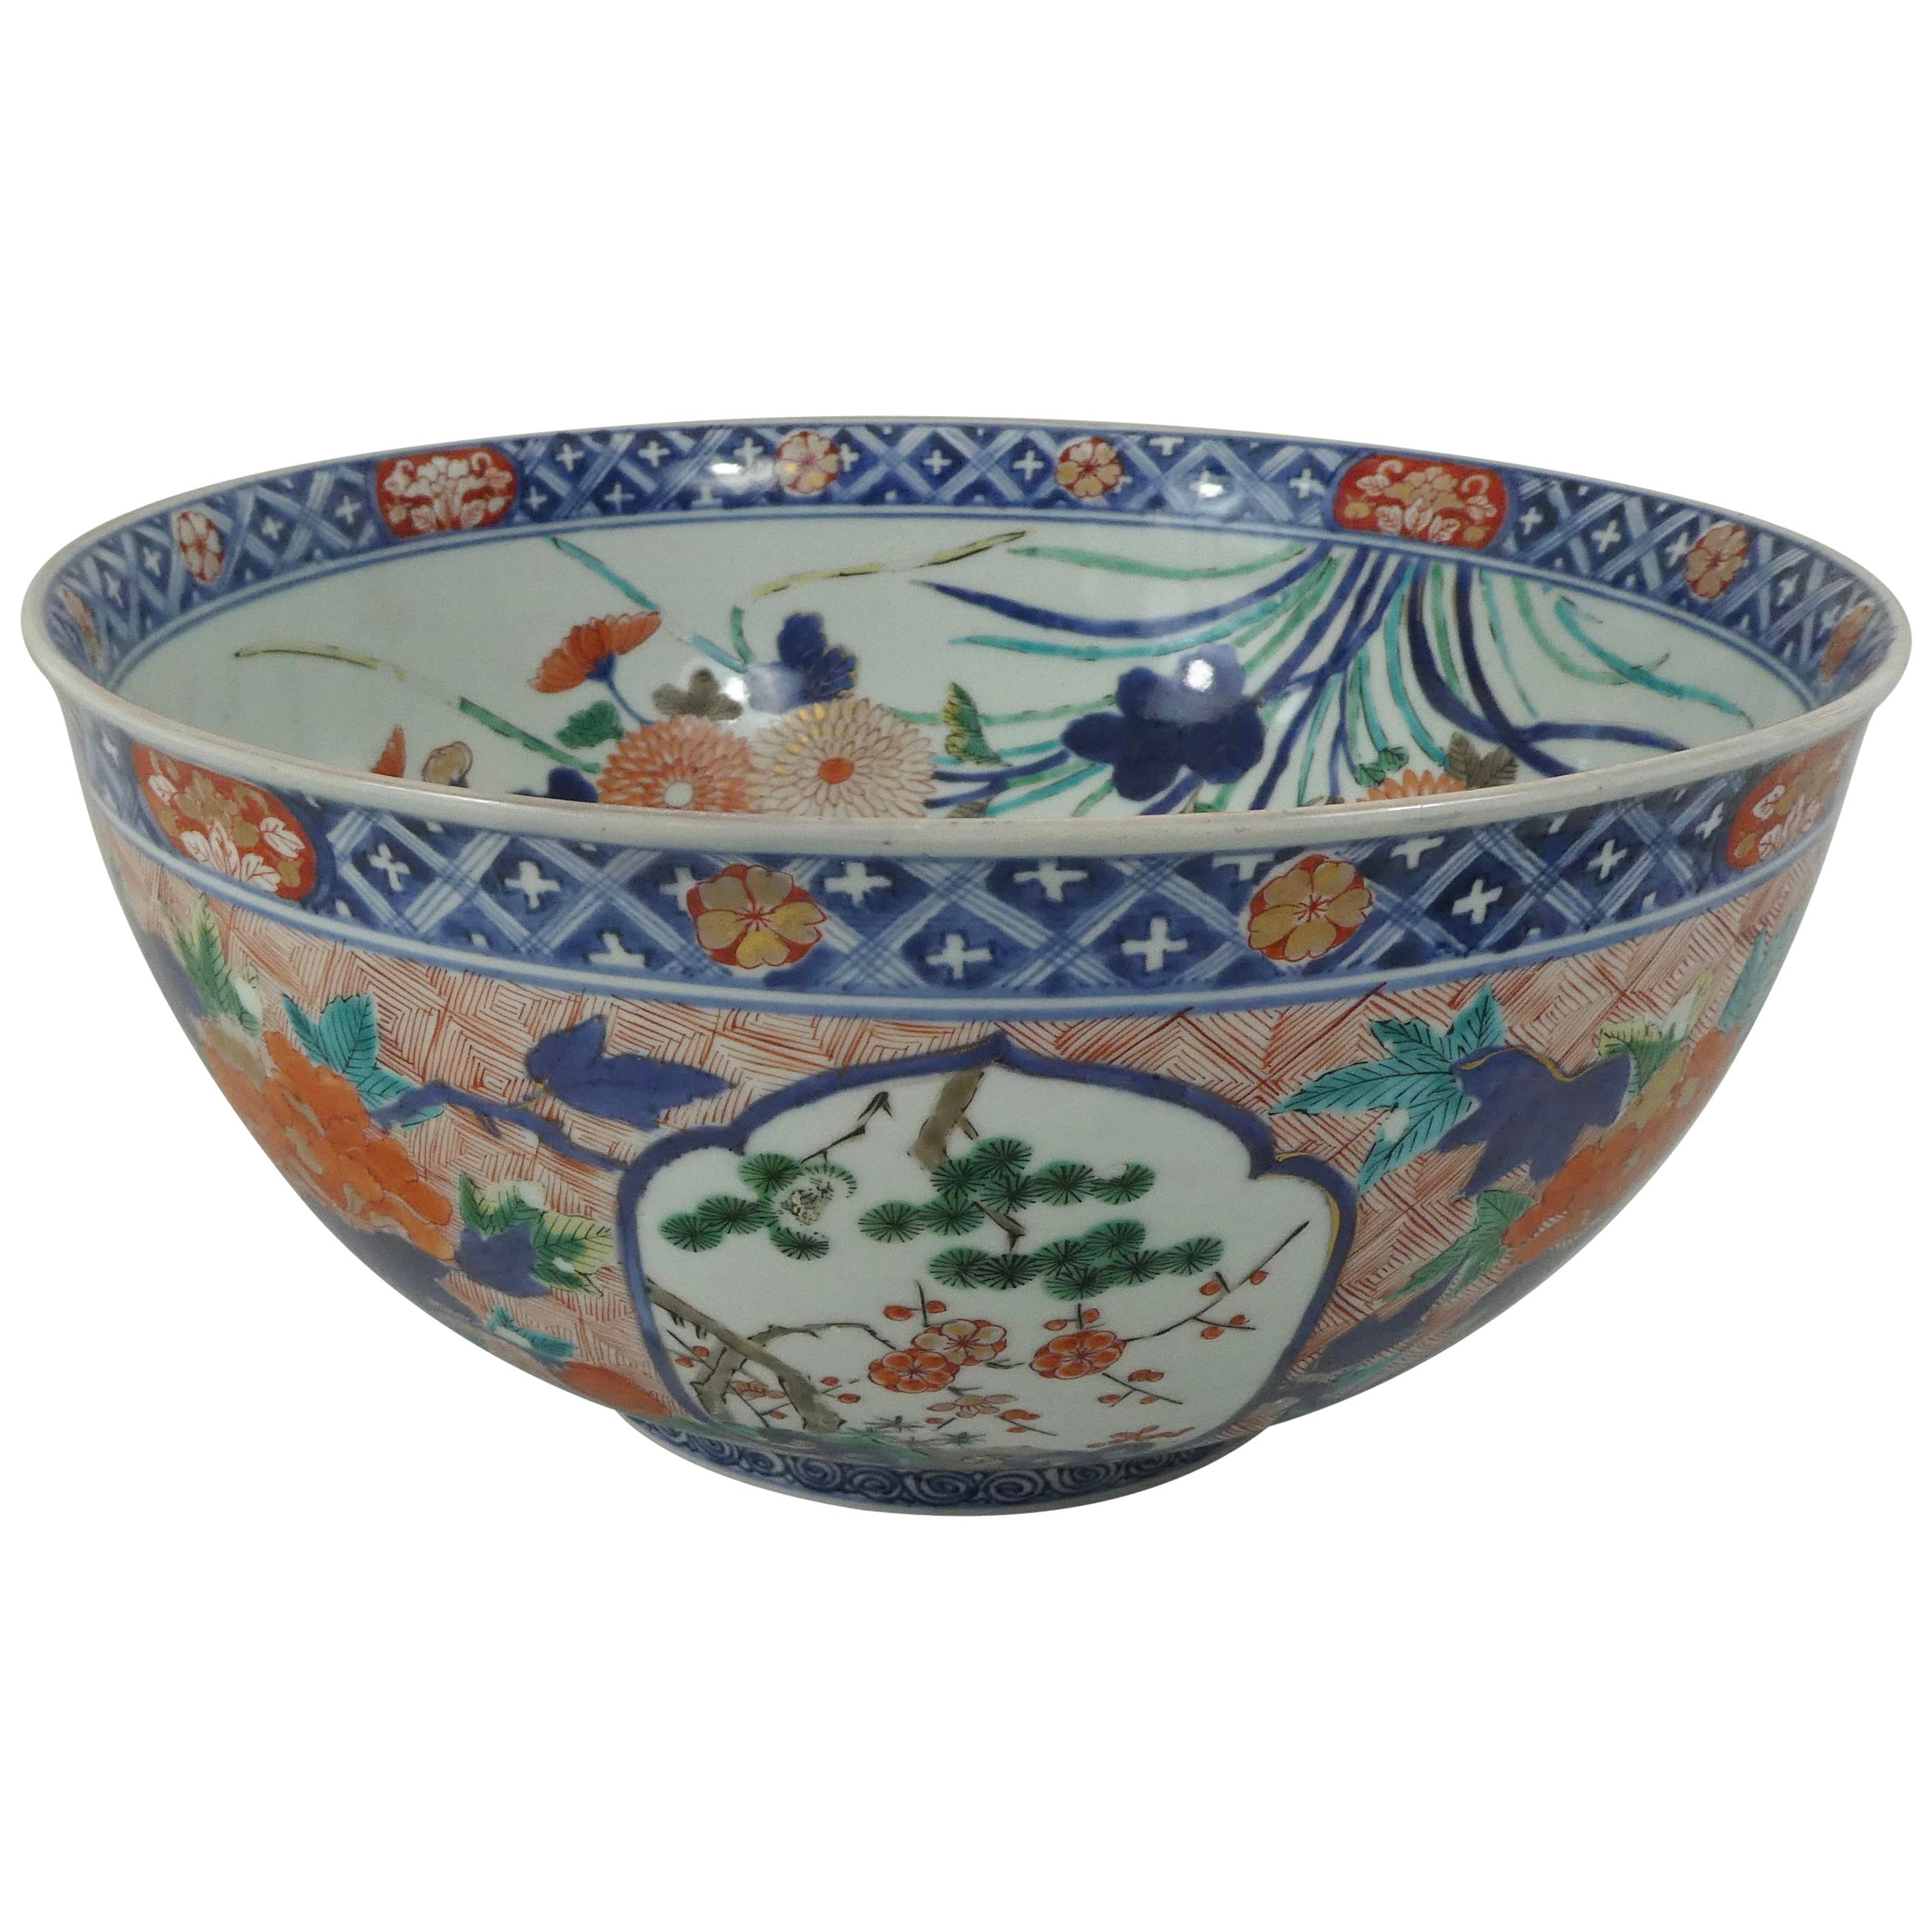 Fine and Large Imari Bowl Decorated with Fish, circa 1680, Genroku Period